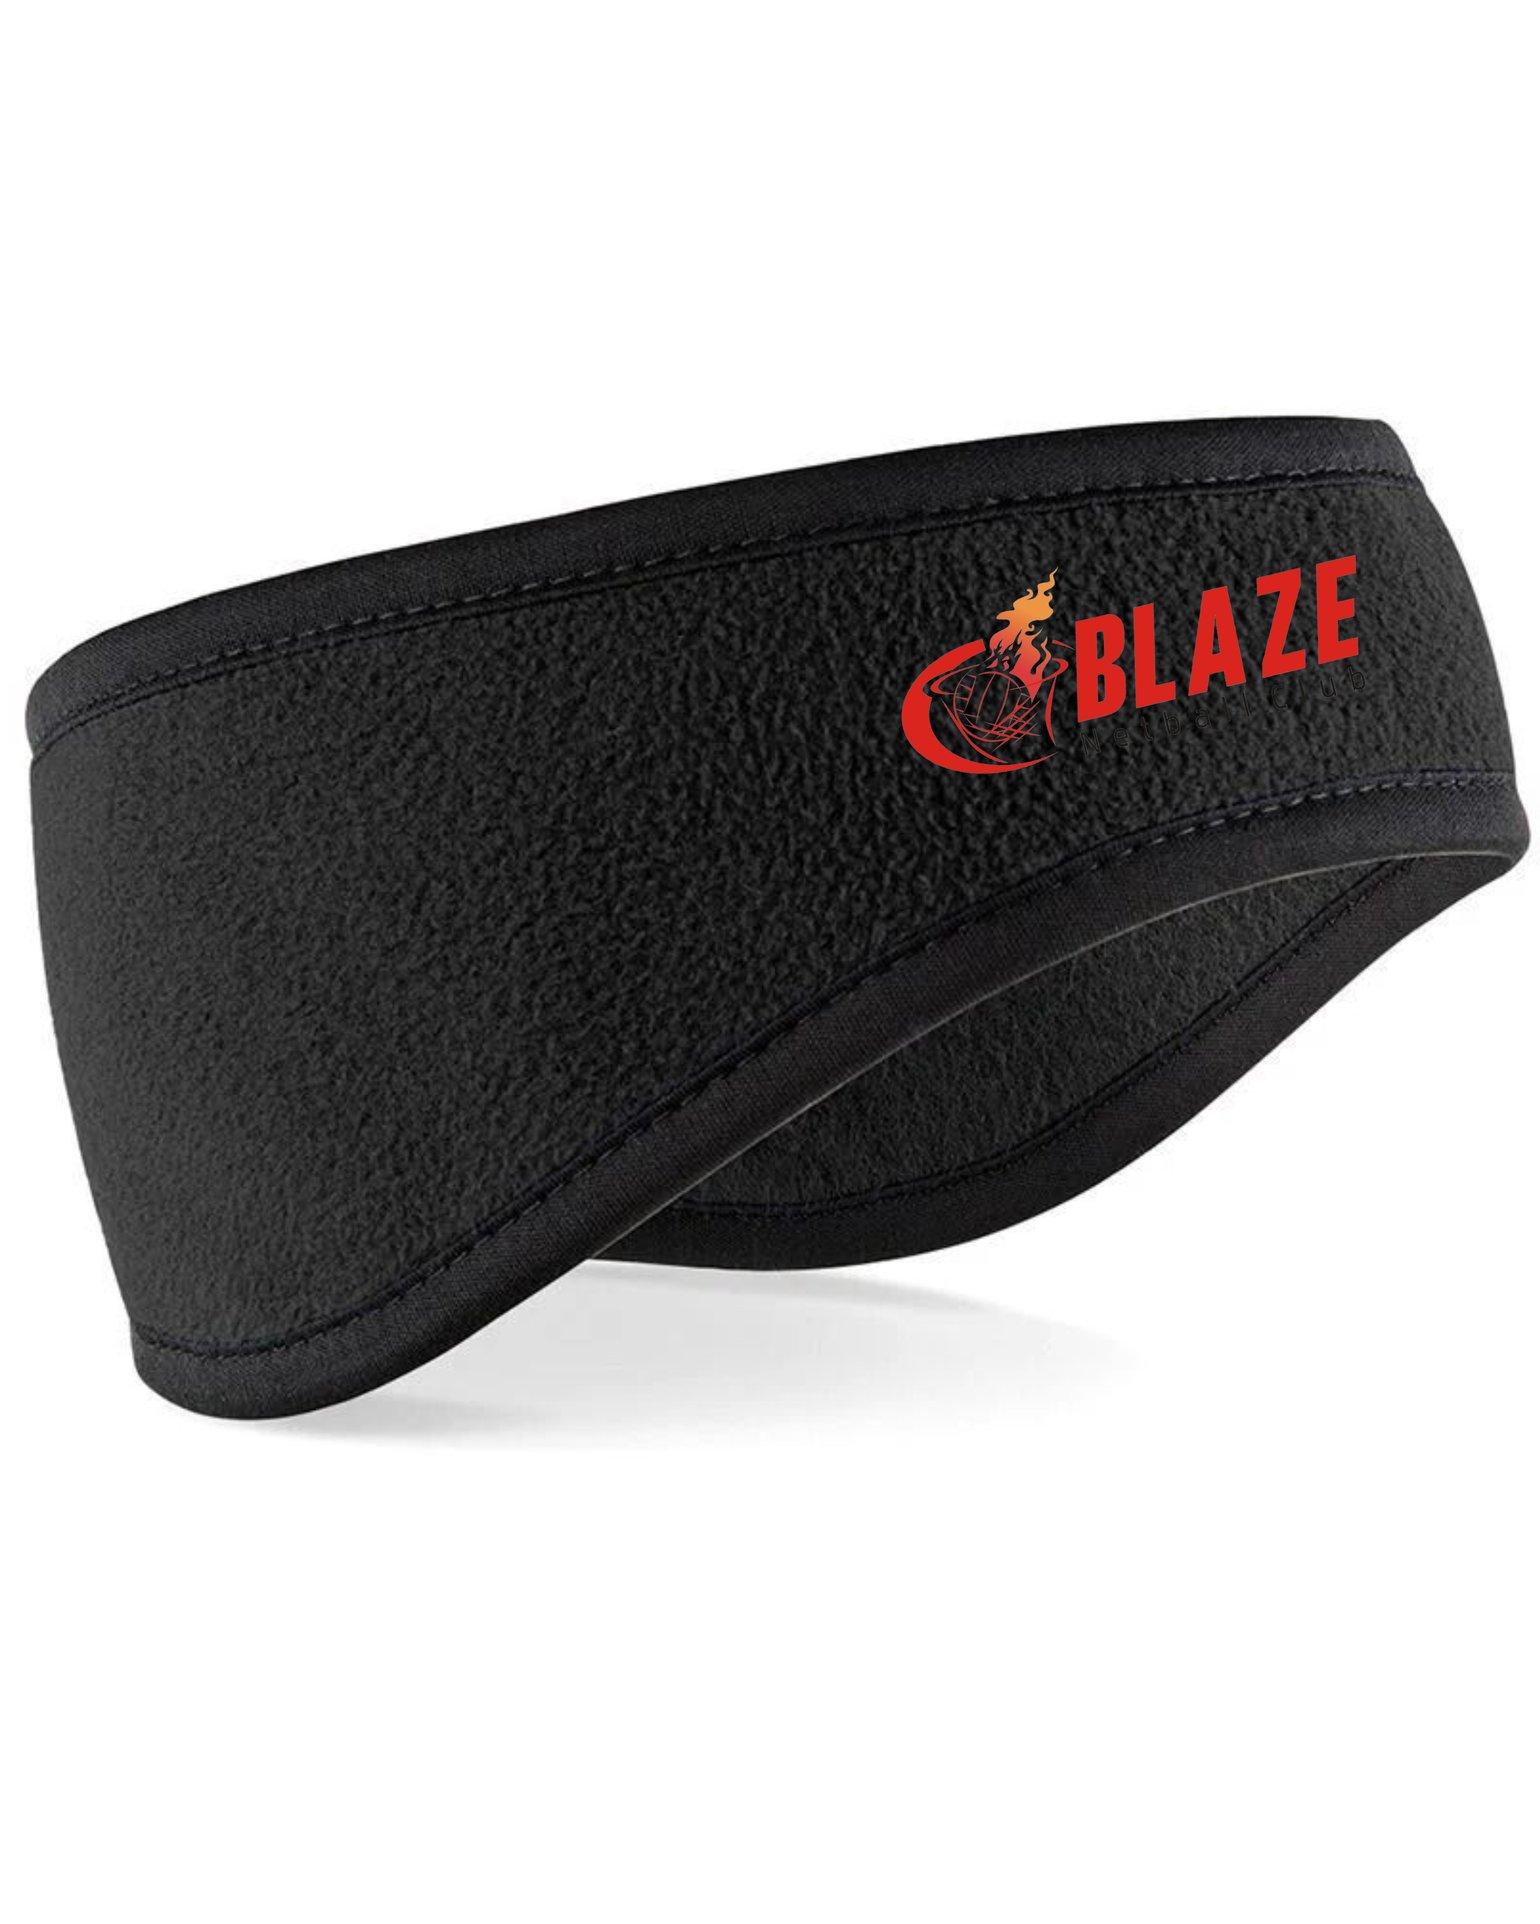 Image of Blaze Headband